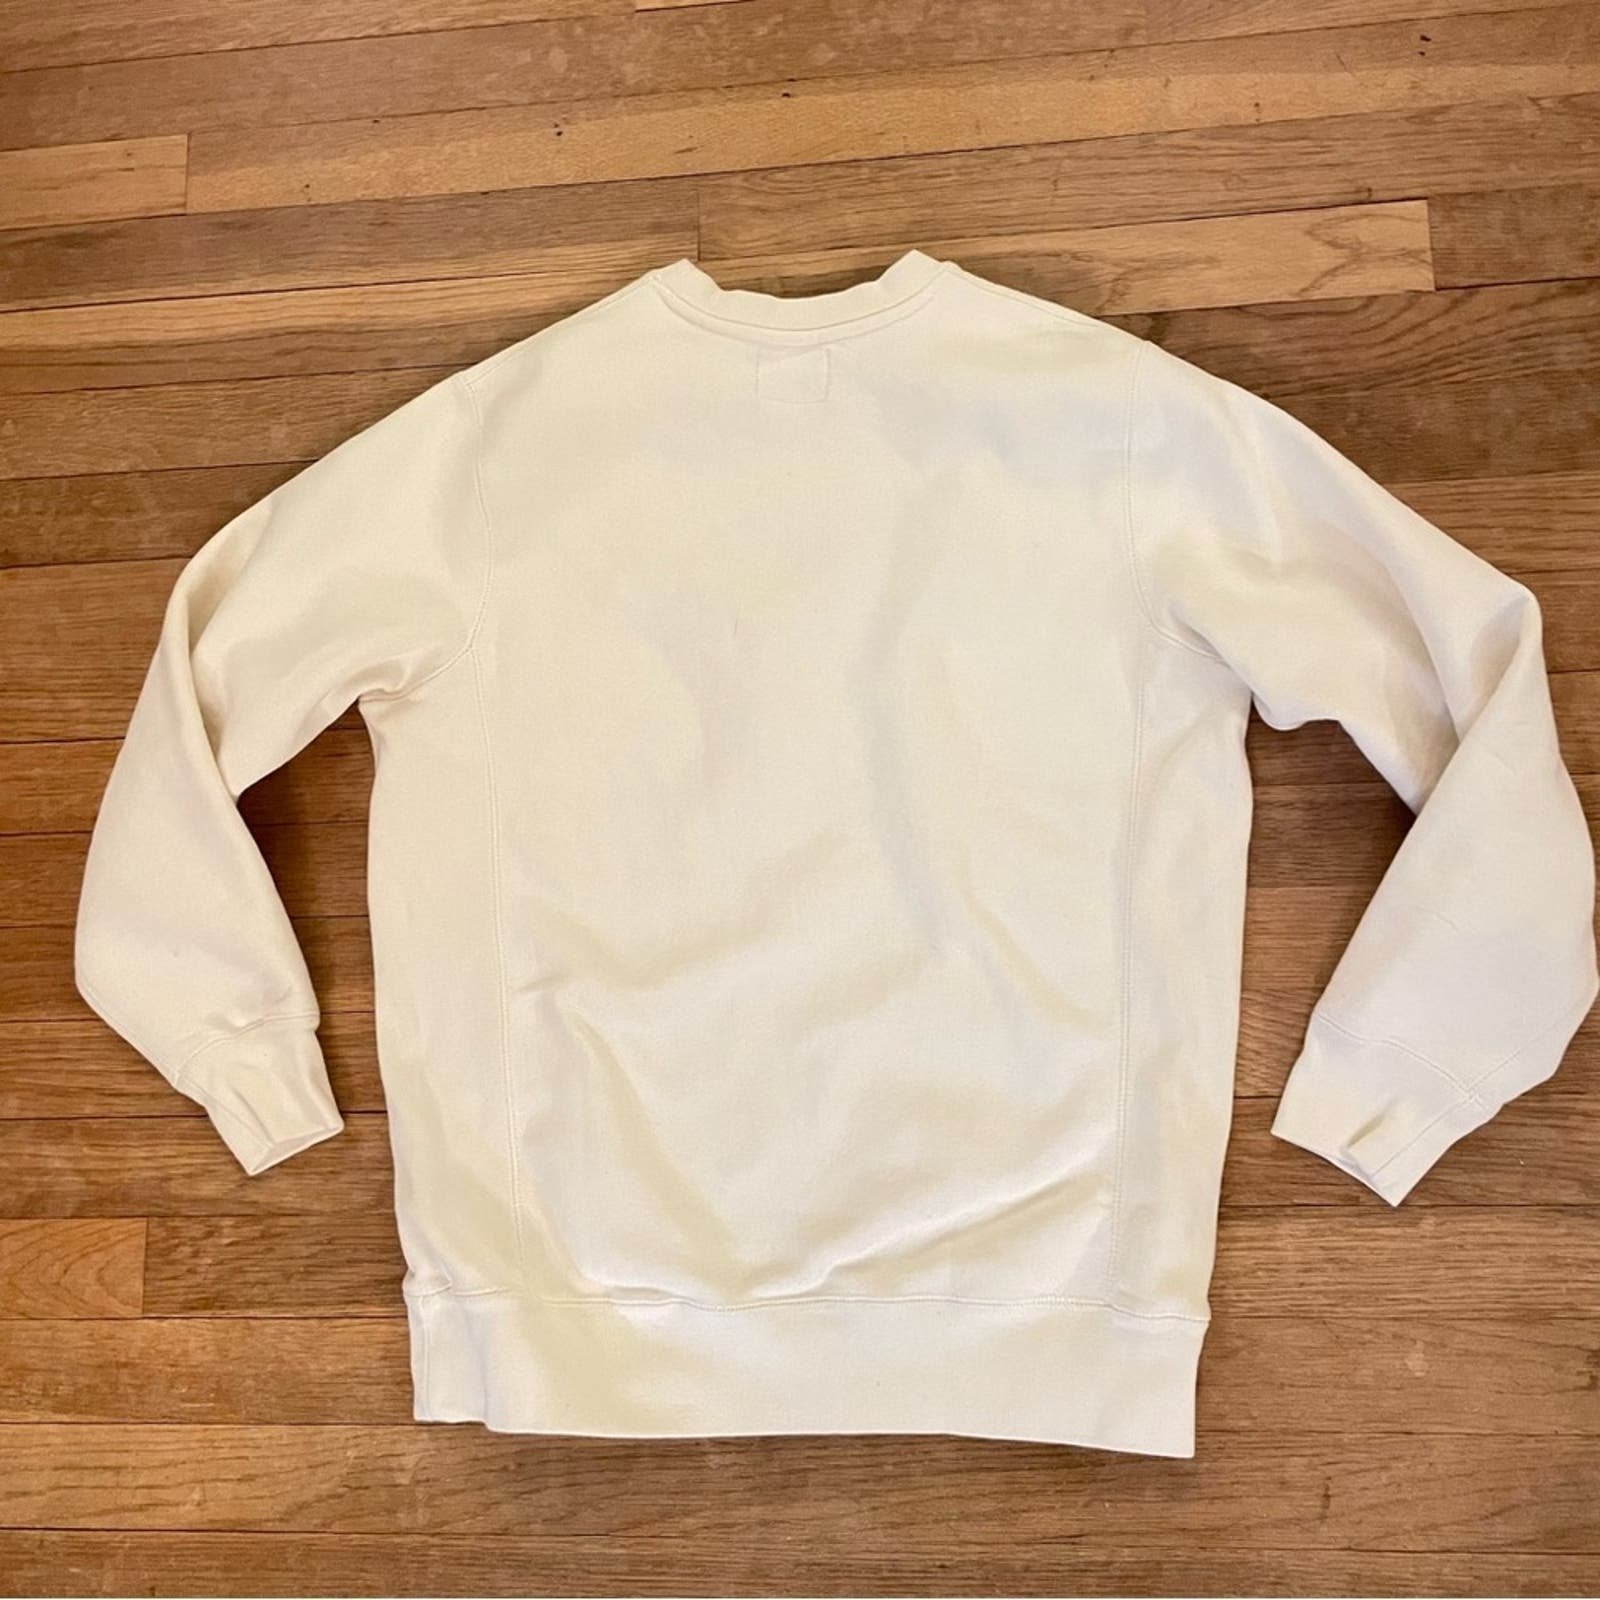 Fashion Alternative women´s white long sleeve sweatshirt shirt top size small S b3 kh5ojJkv1 hot sale